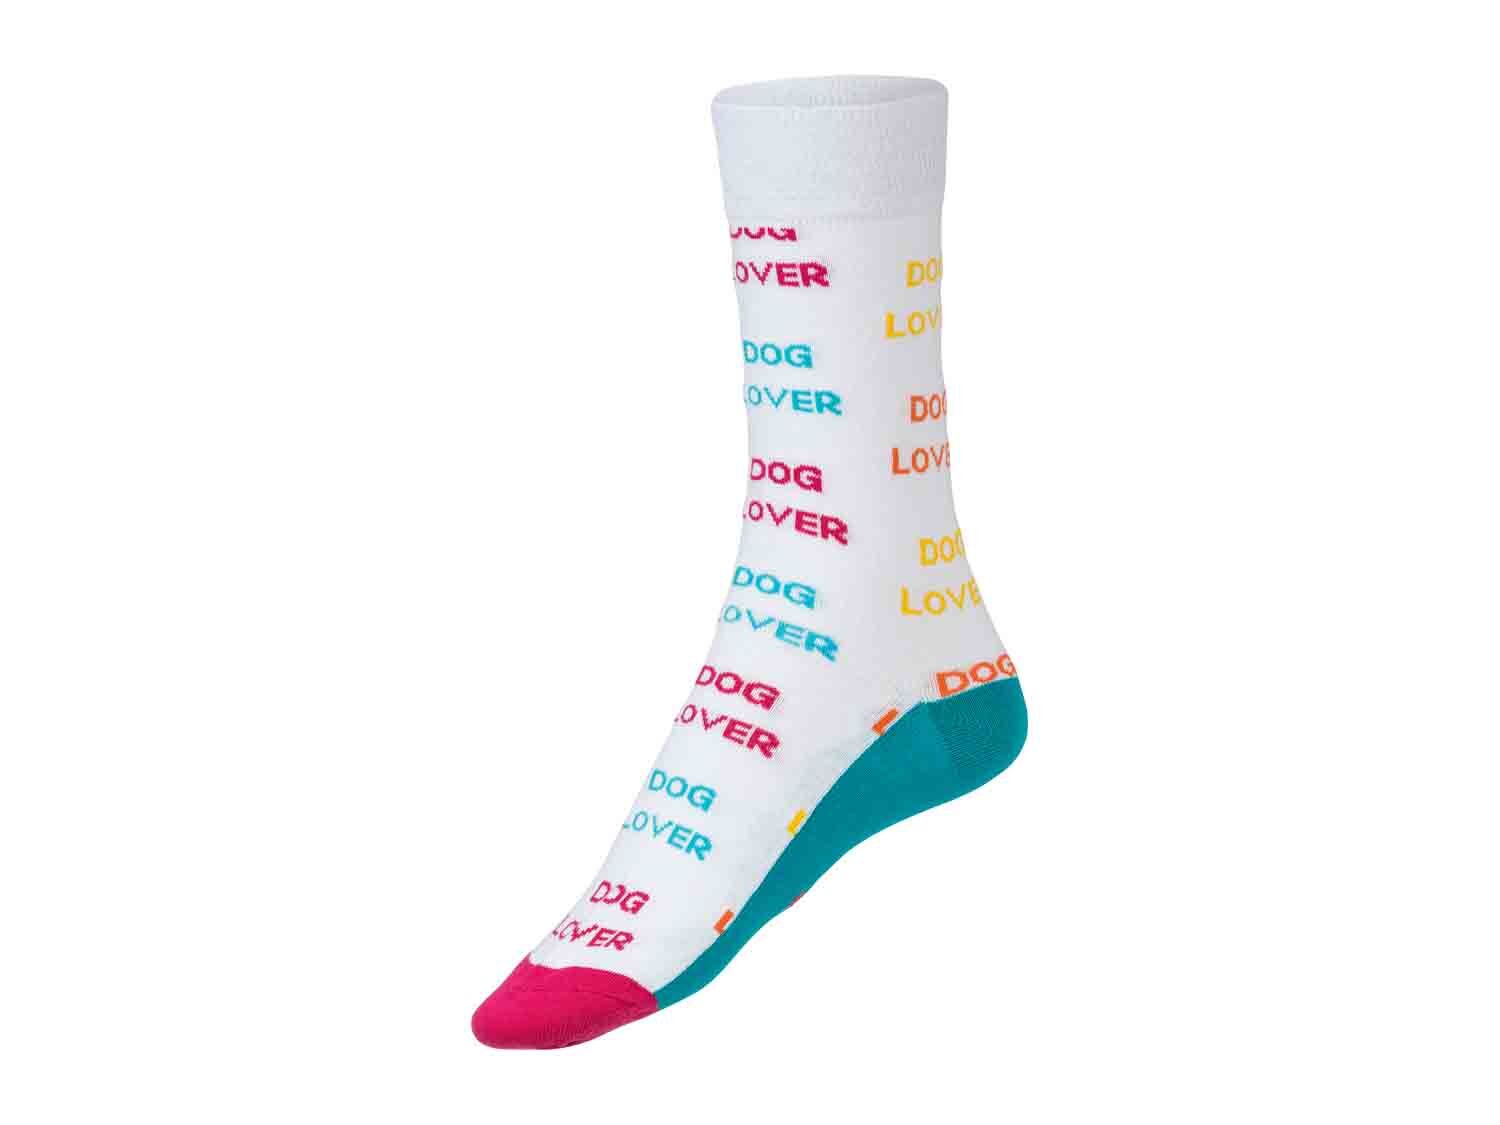 Fun Socks ® Calcetines pack 3 en caja de regalo